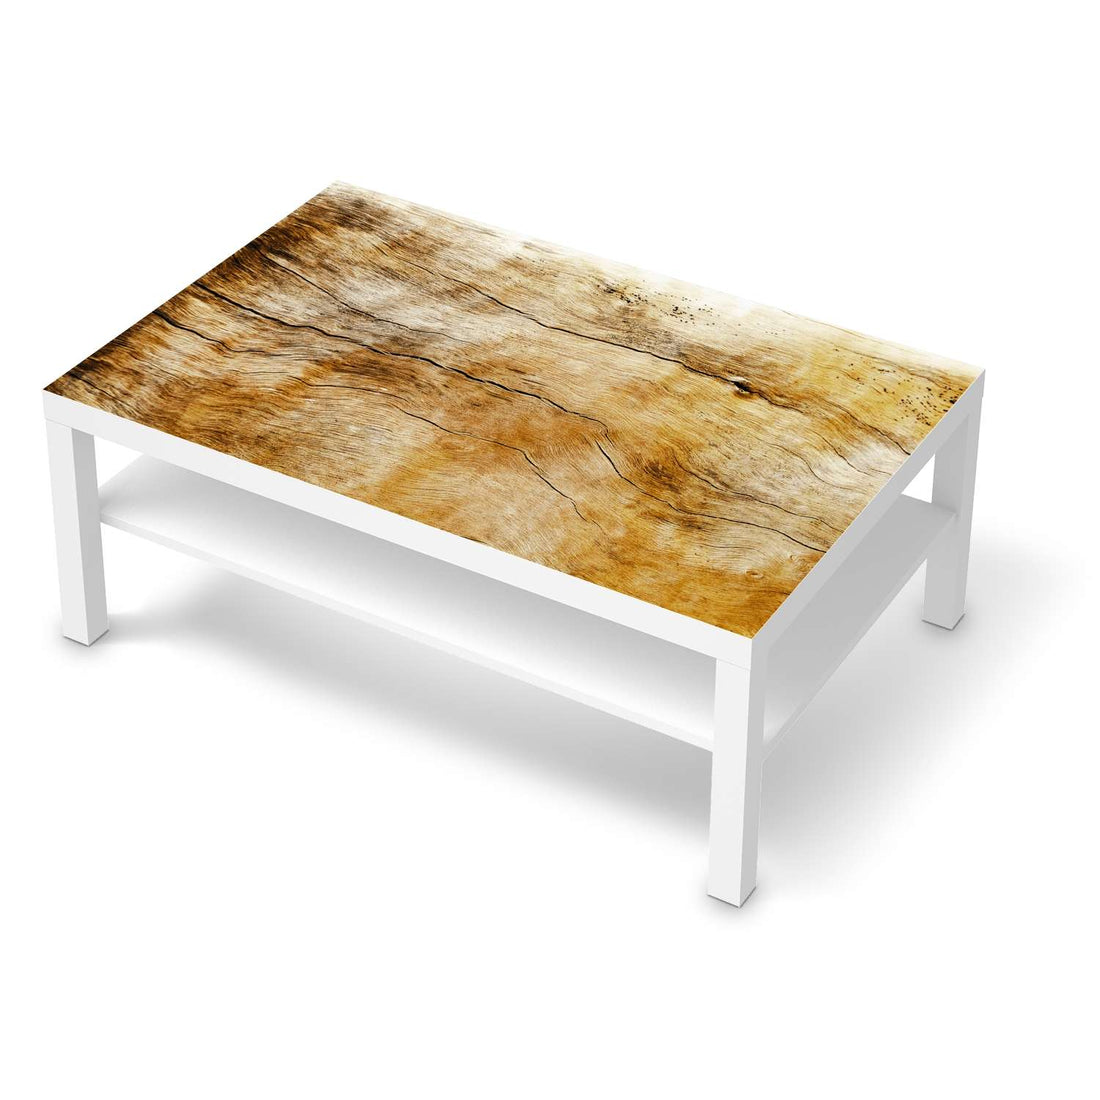 Klebefolie Unterholz - IKEA Lack Tisch 118x78 cm - weiss